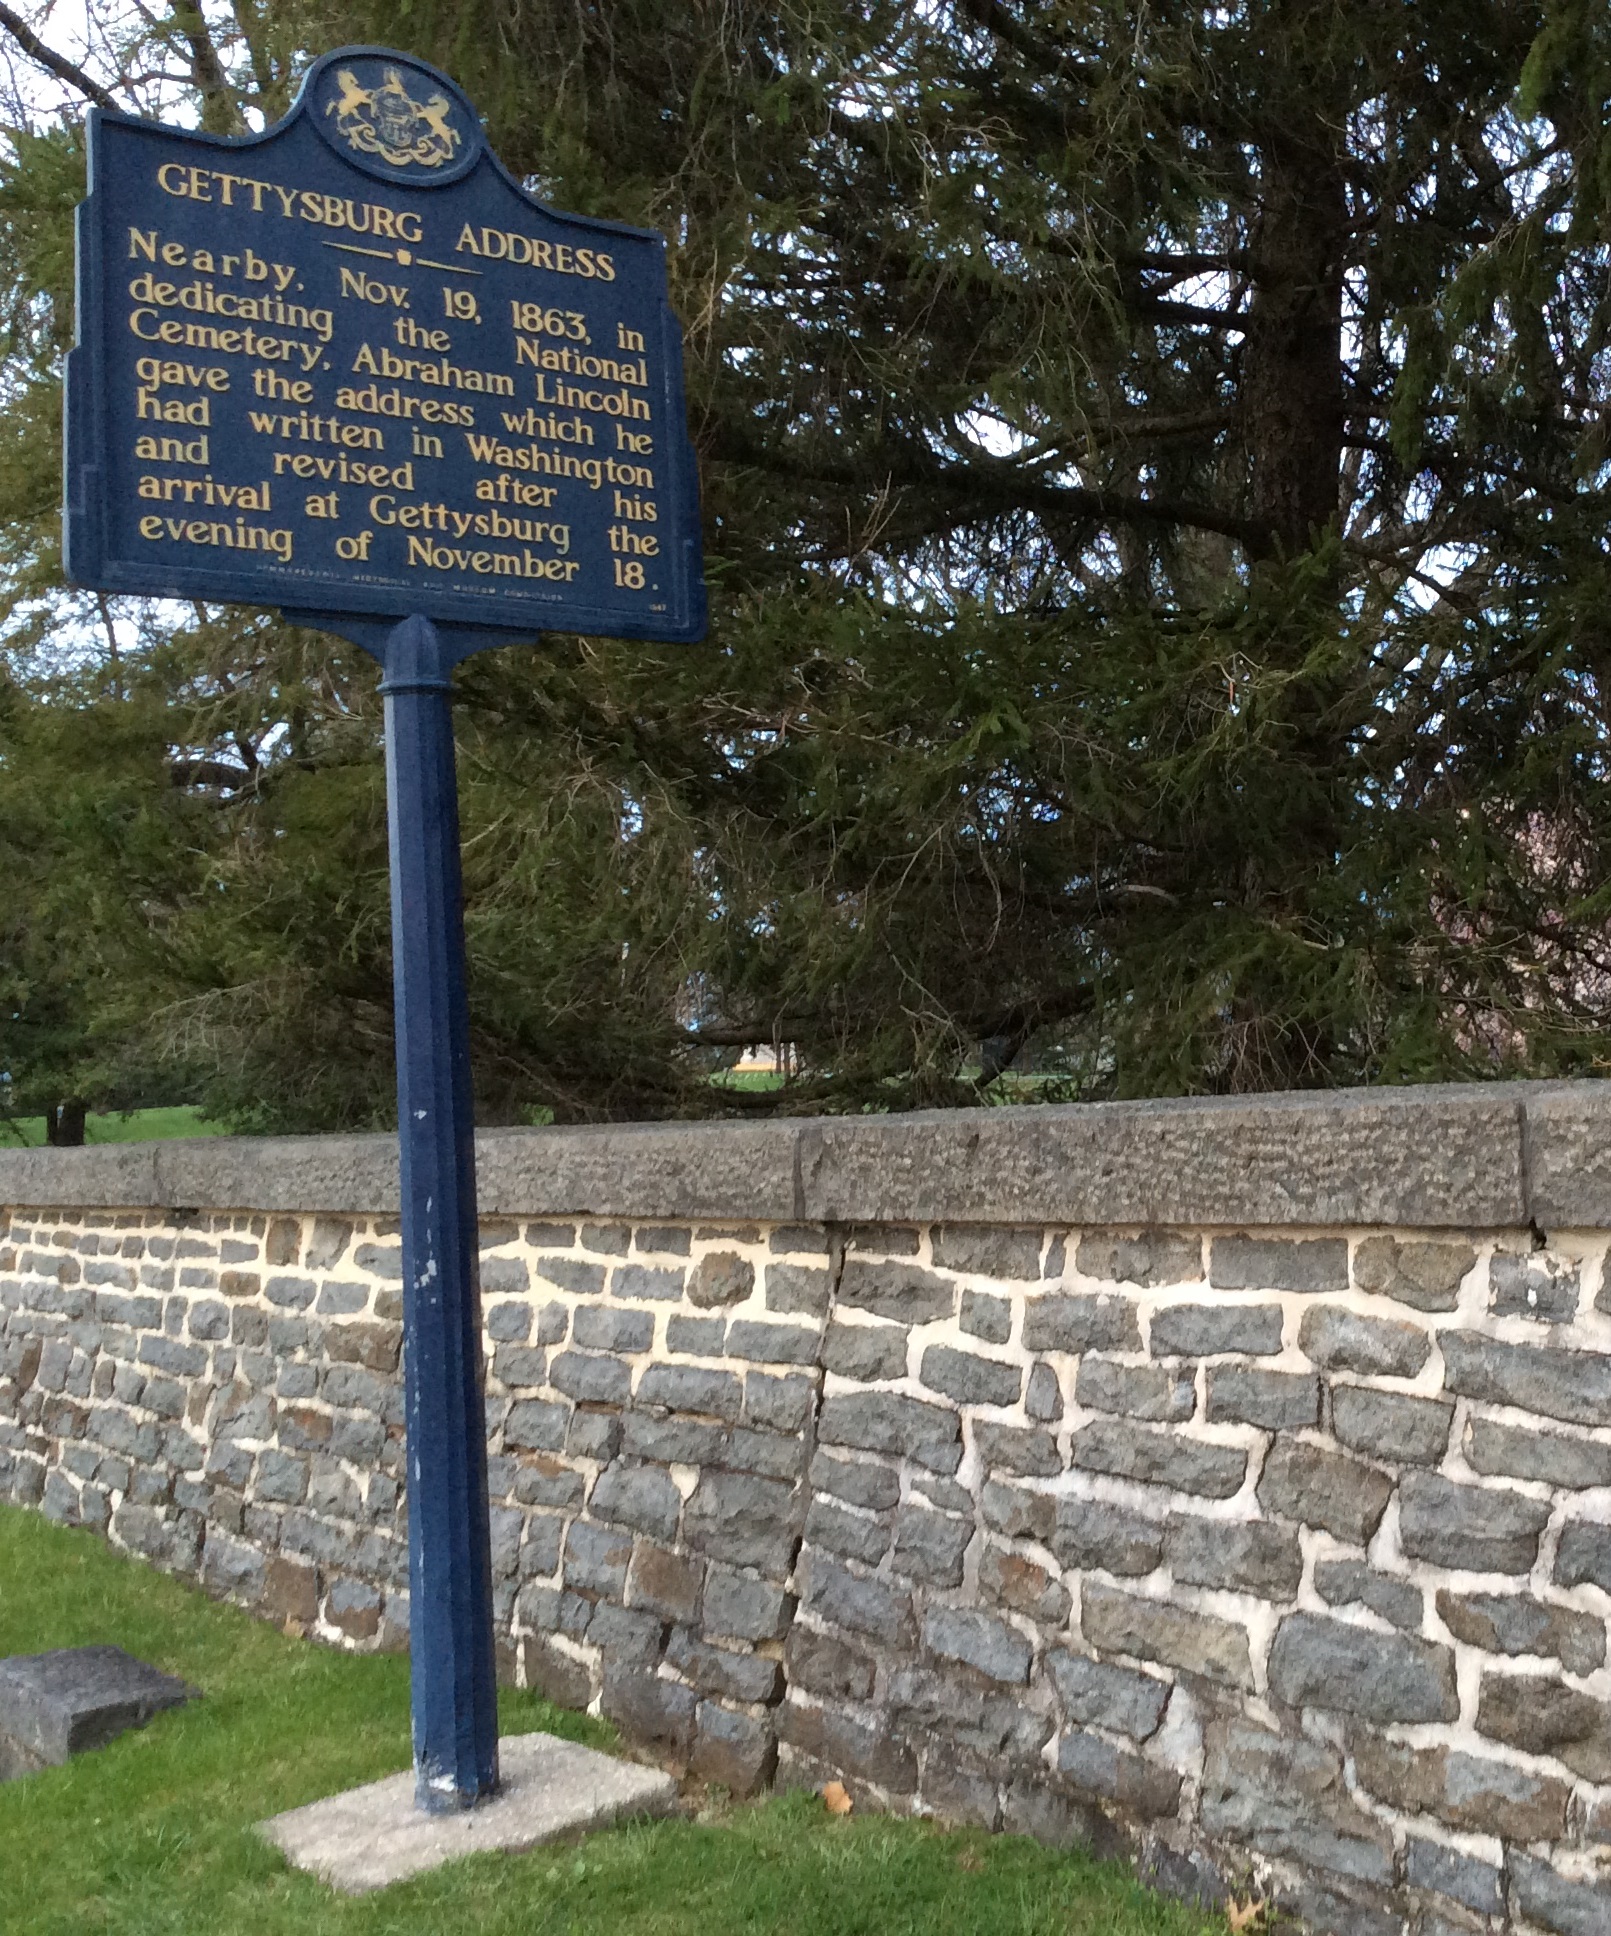 Gettysburg Address historical marker at Gettysburg National Cemetery